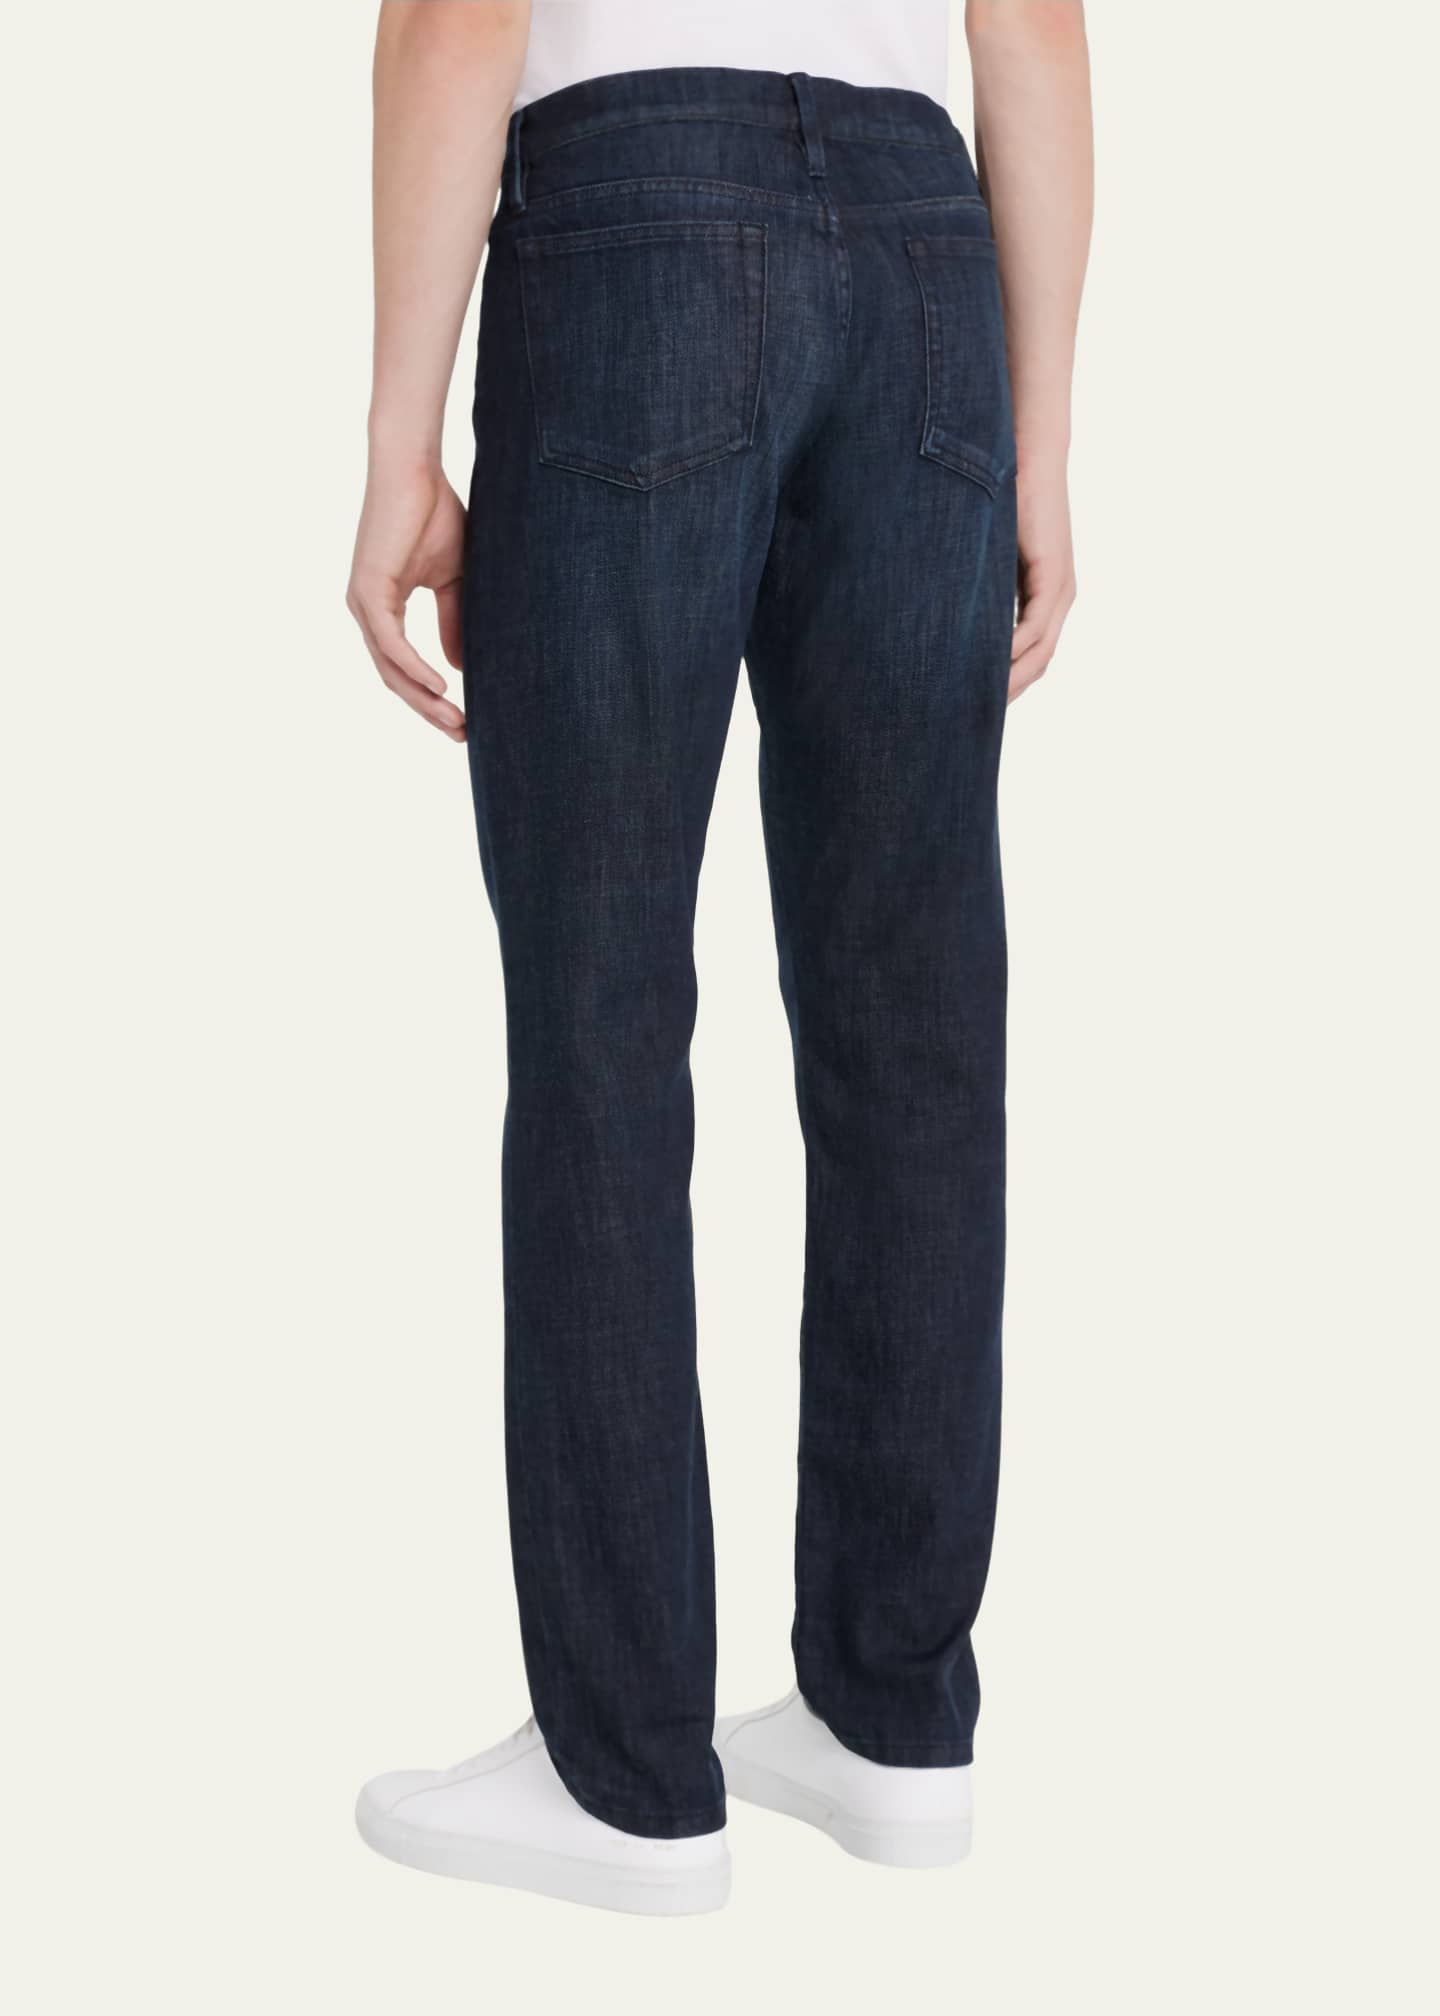 J Brand Kane Slim Straight leg jeans- 36